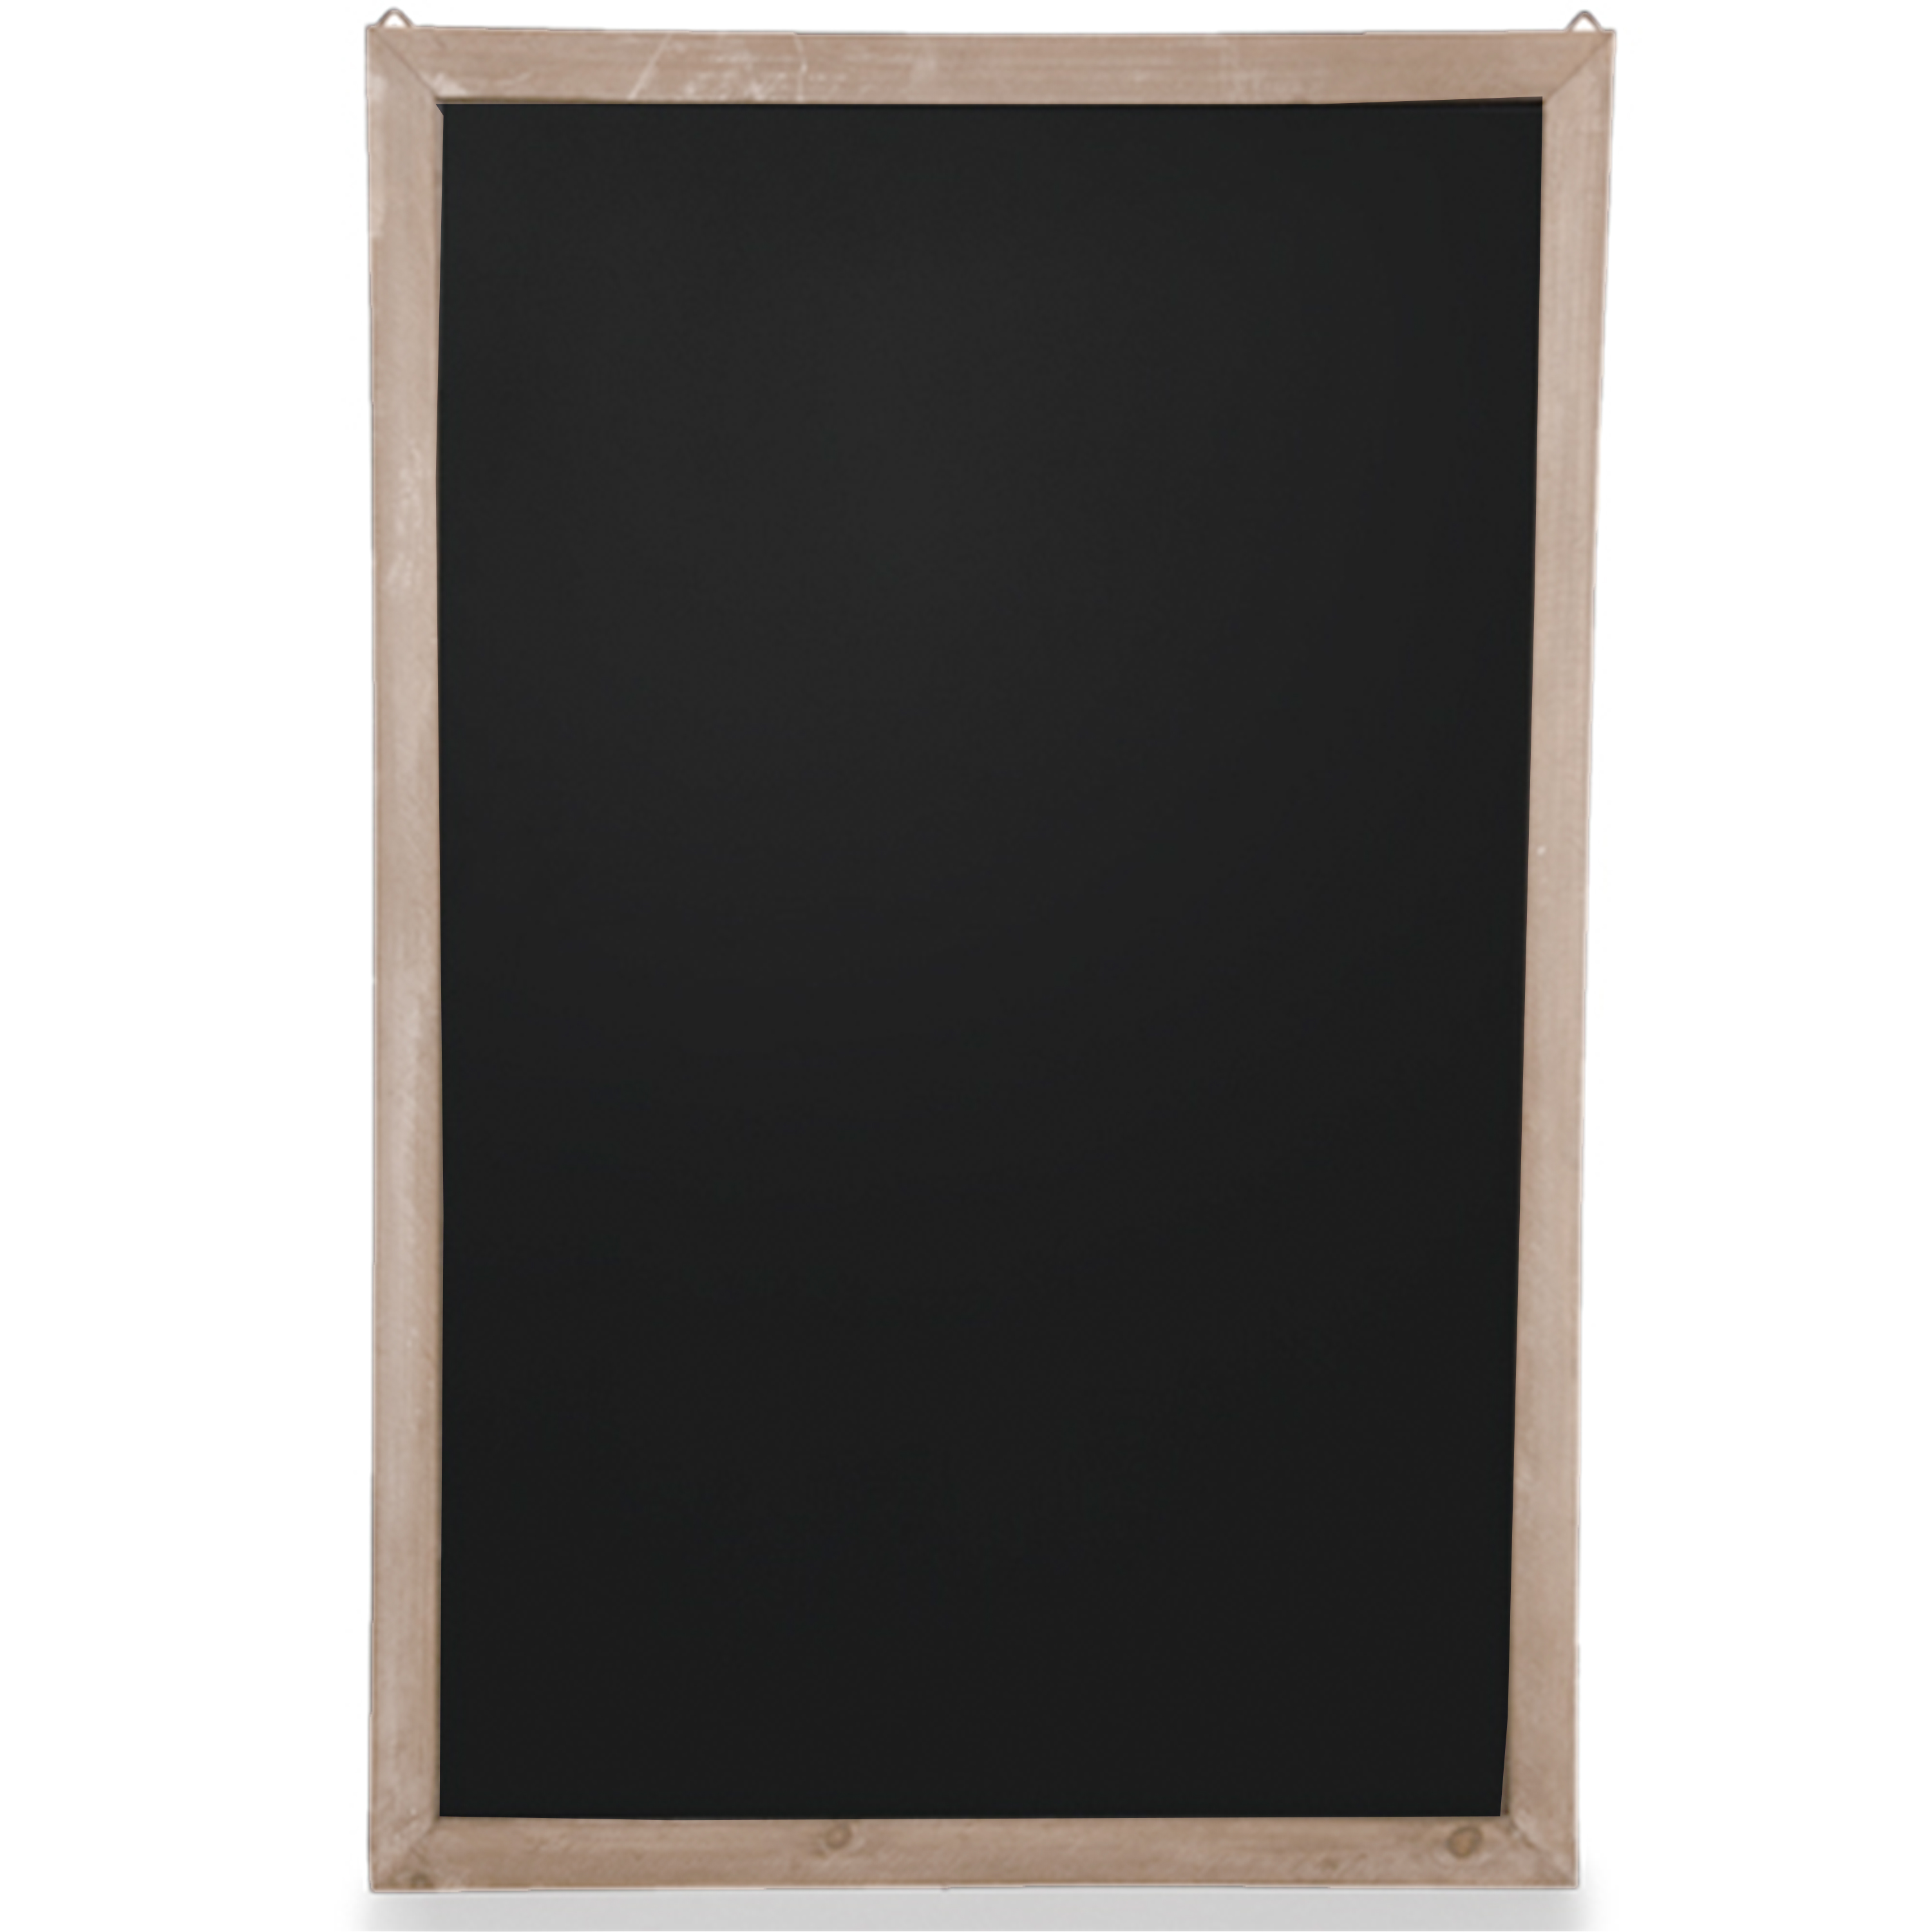 SIGNMARK Green Wooden Chalk Board, Board Size (Inches): 24 x 36